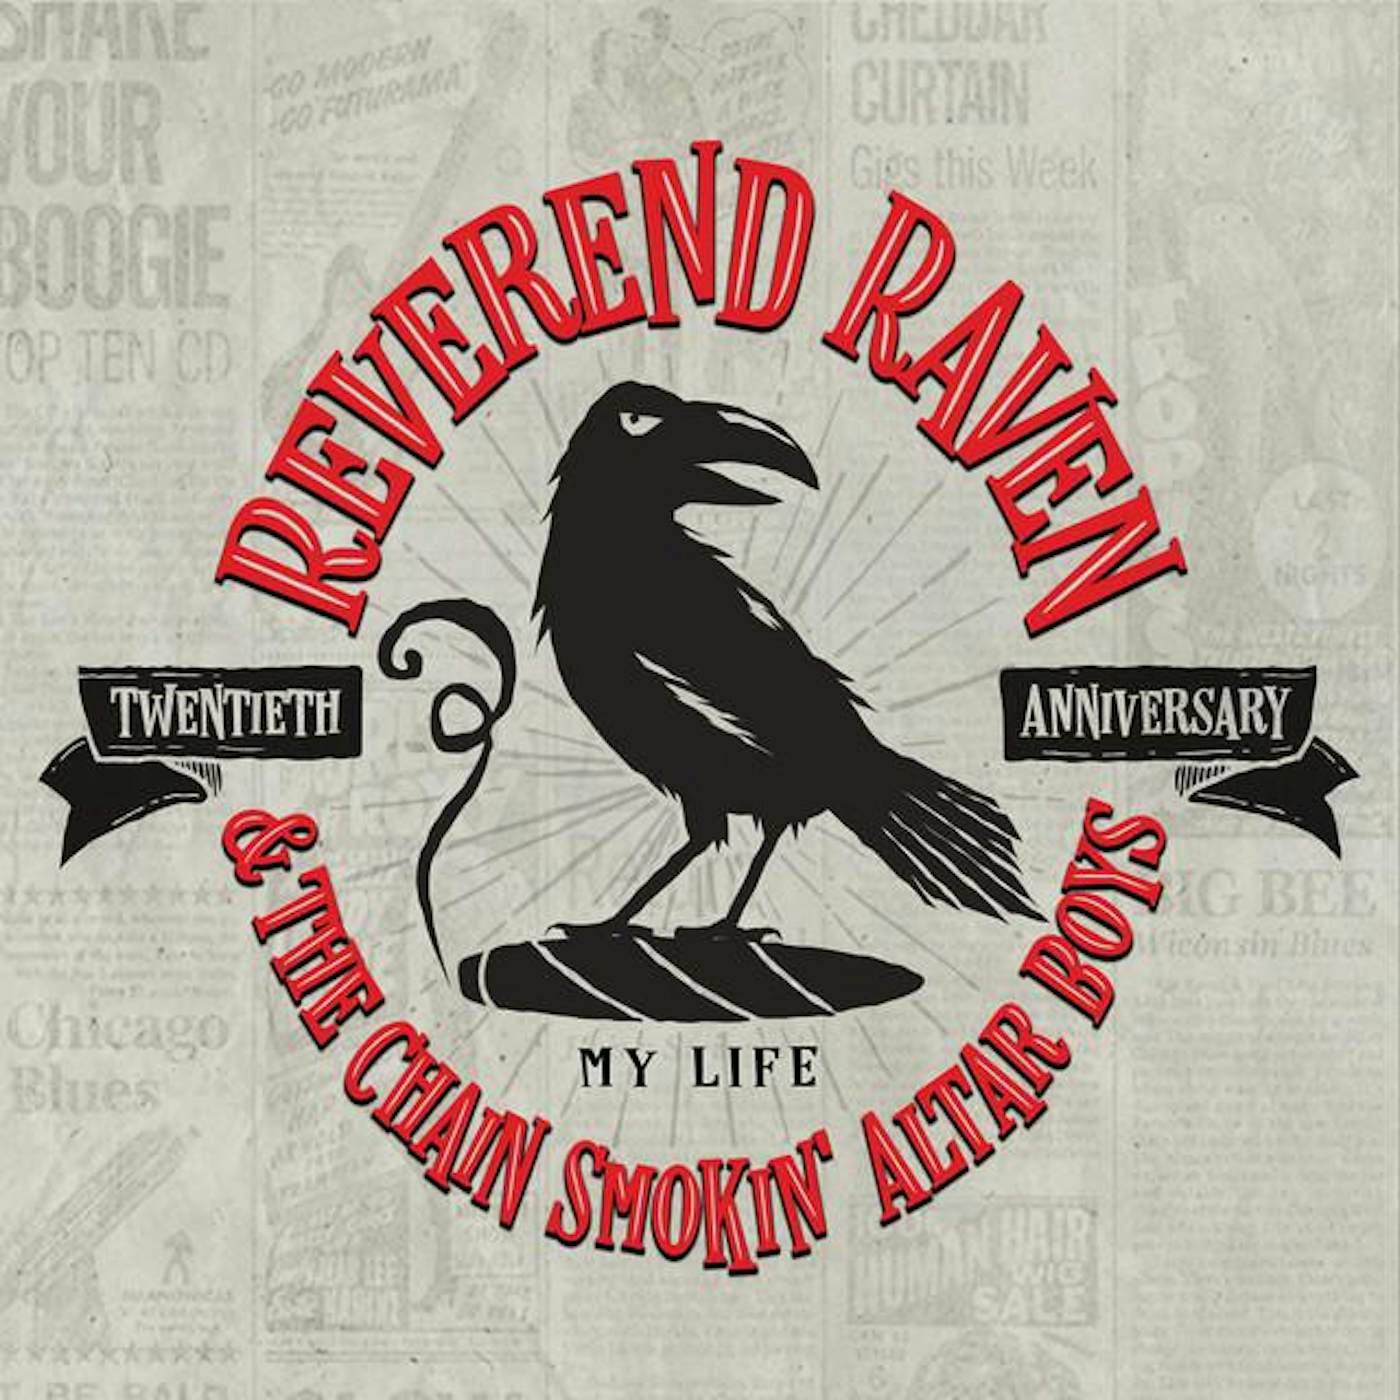 Reverend Raven & the Chain Smoking Altar Boys